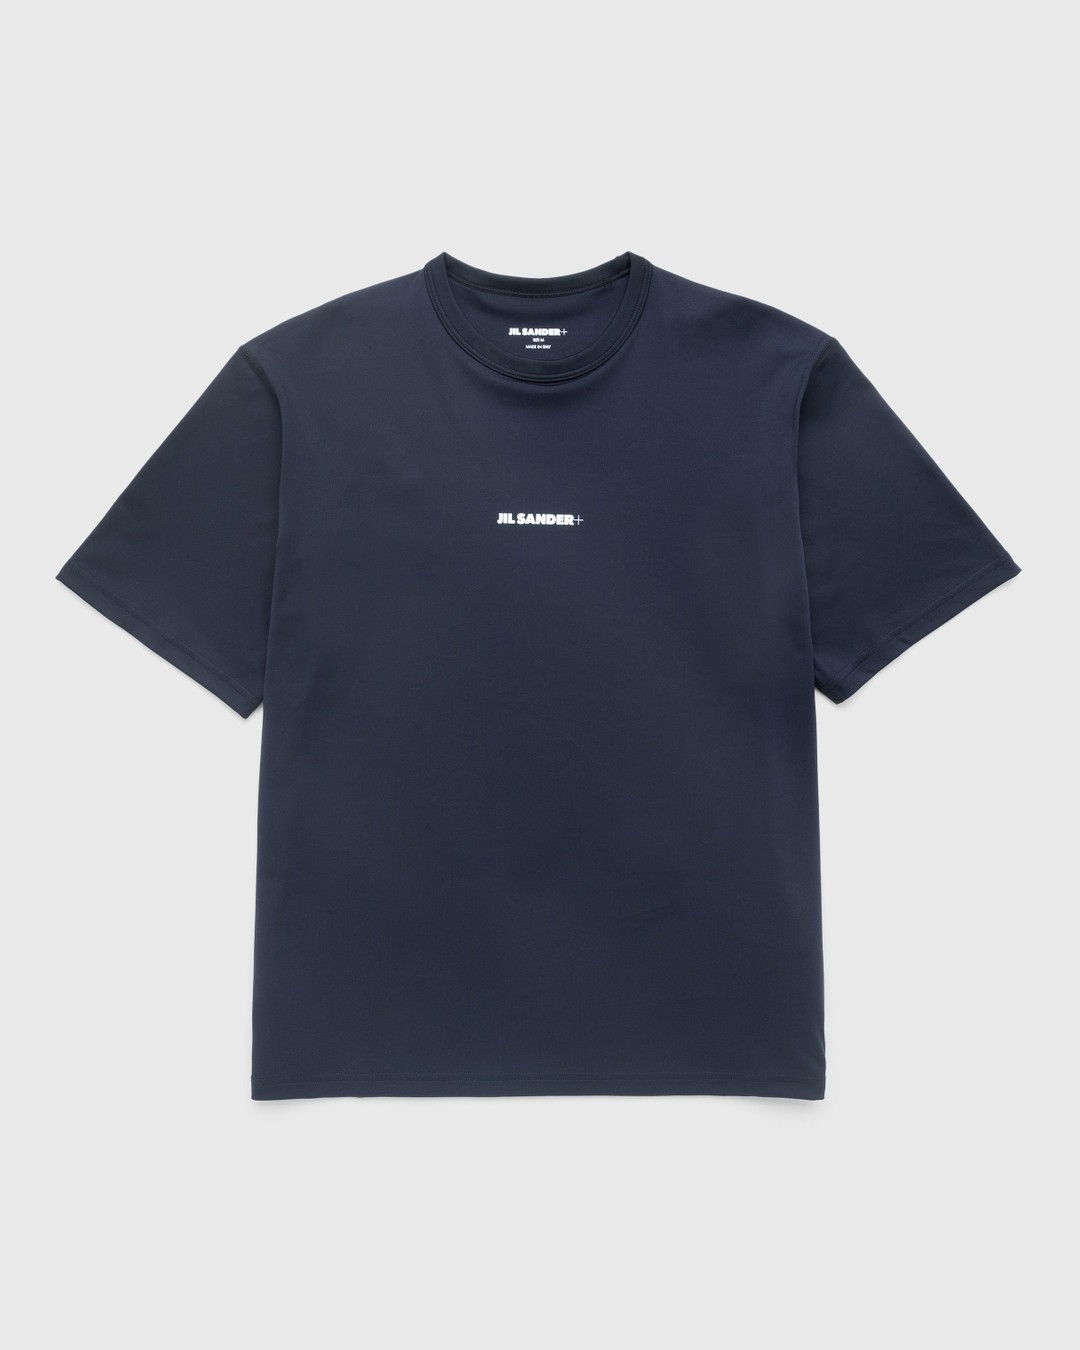 Jil Sander – Logo T-Shirt Black - Tops - Black - Image 1